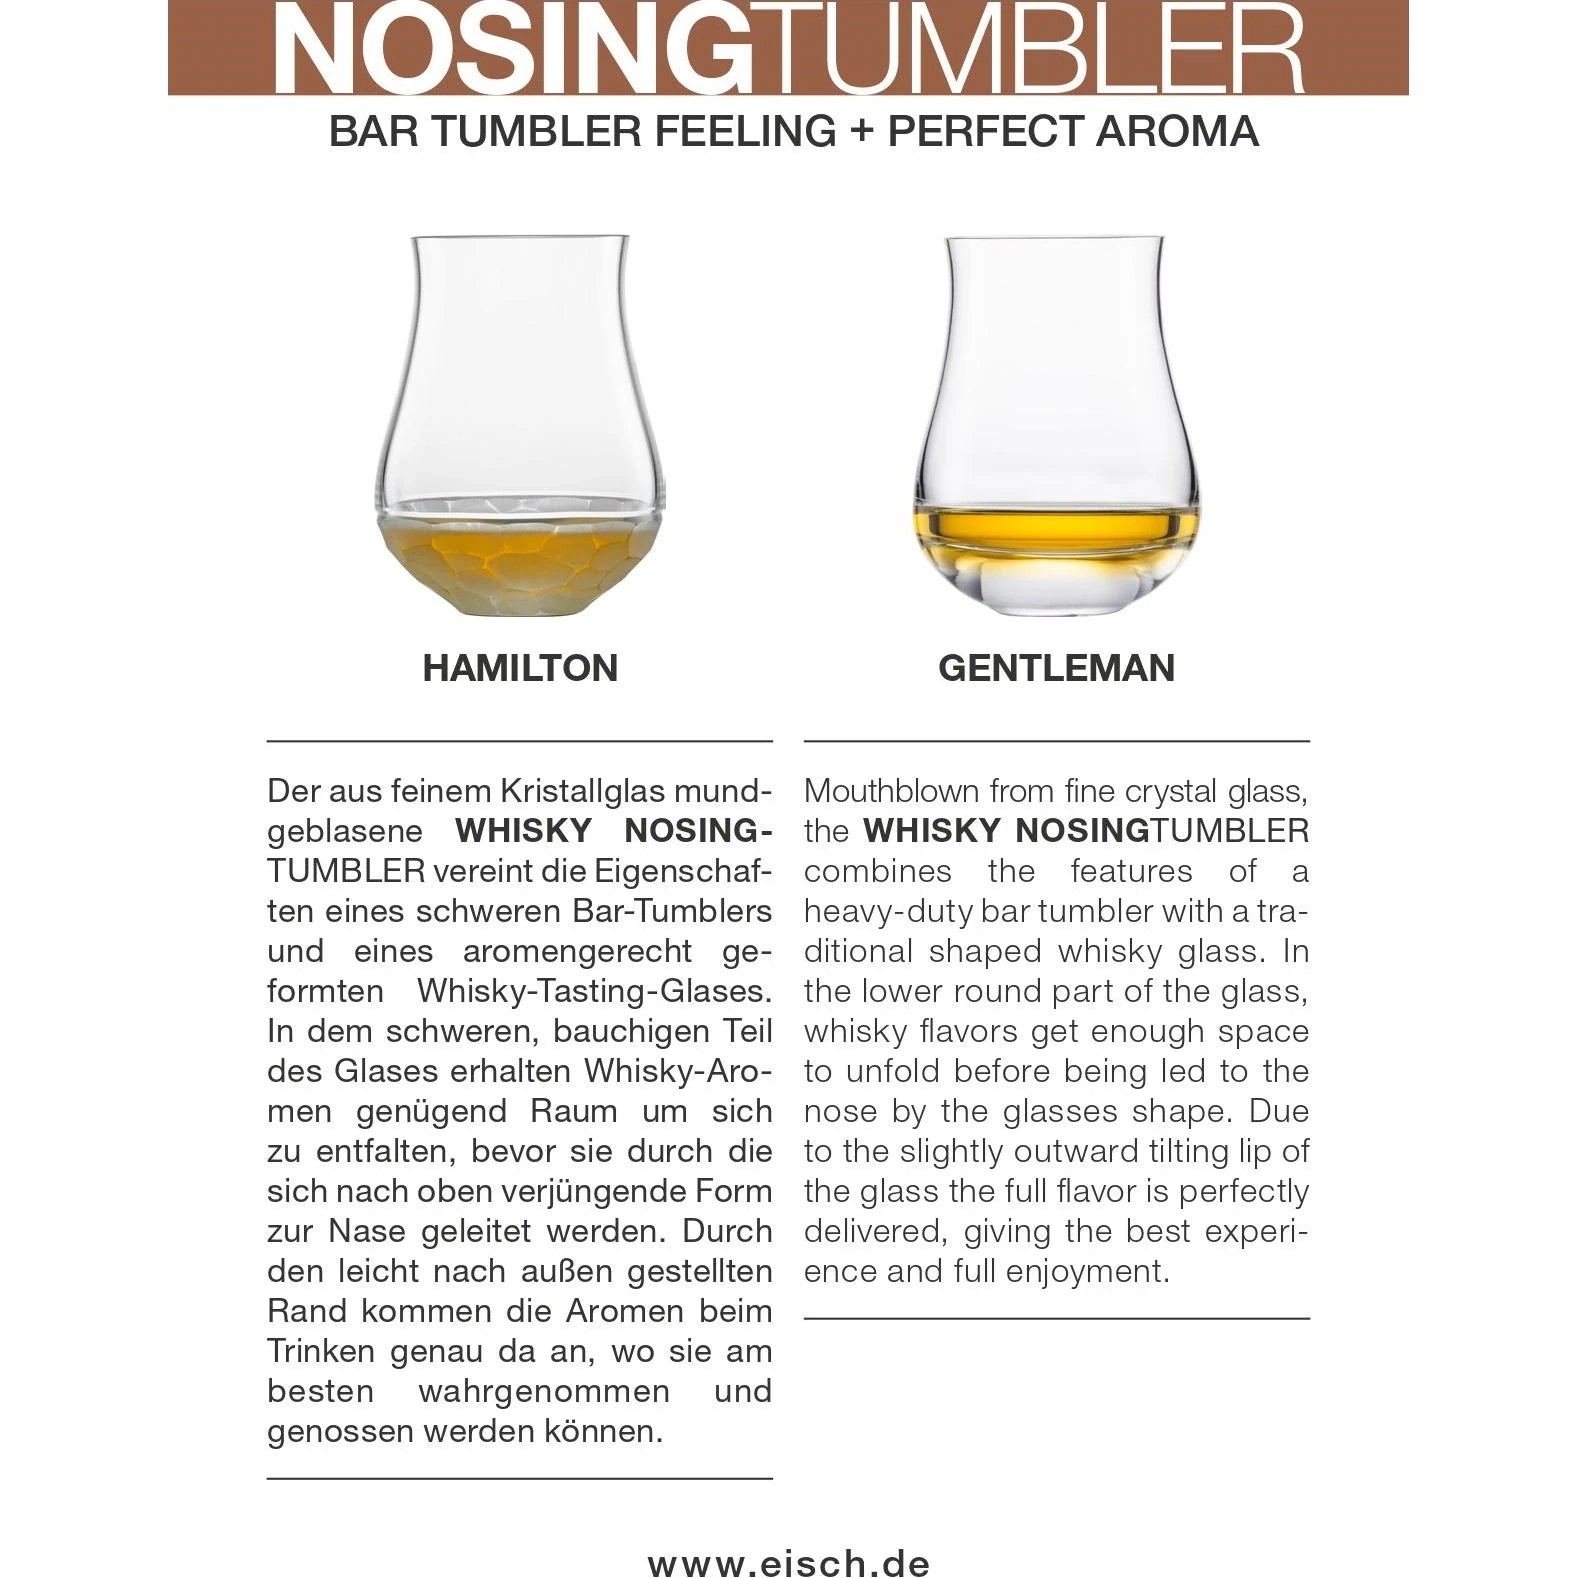 Eisch Whisky Nosing Tumbler Gentleman - 2 Stück in Geschenkröhre 128/8 Nosing-Tumbler Vergleich